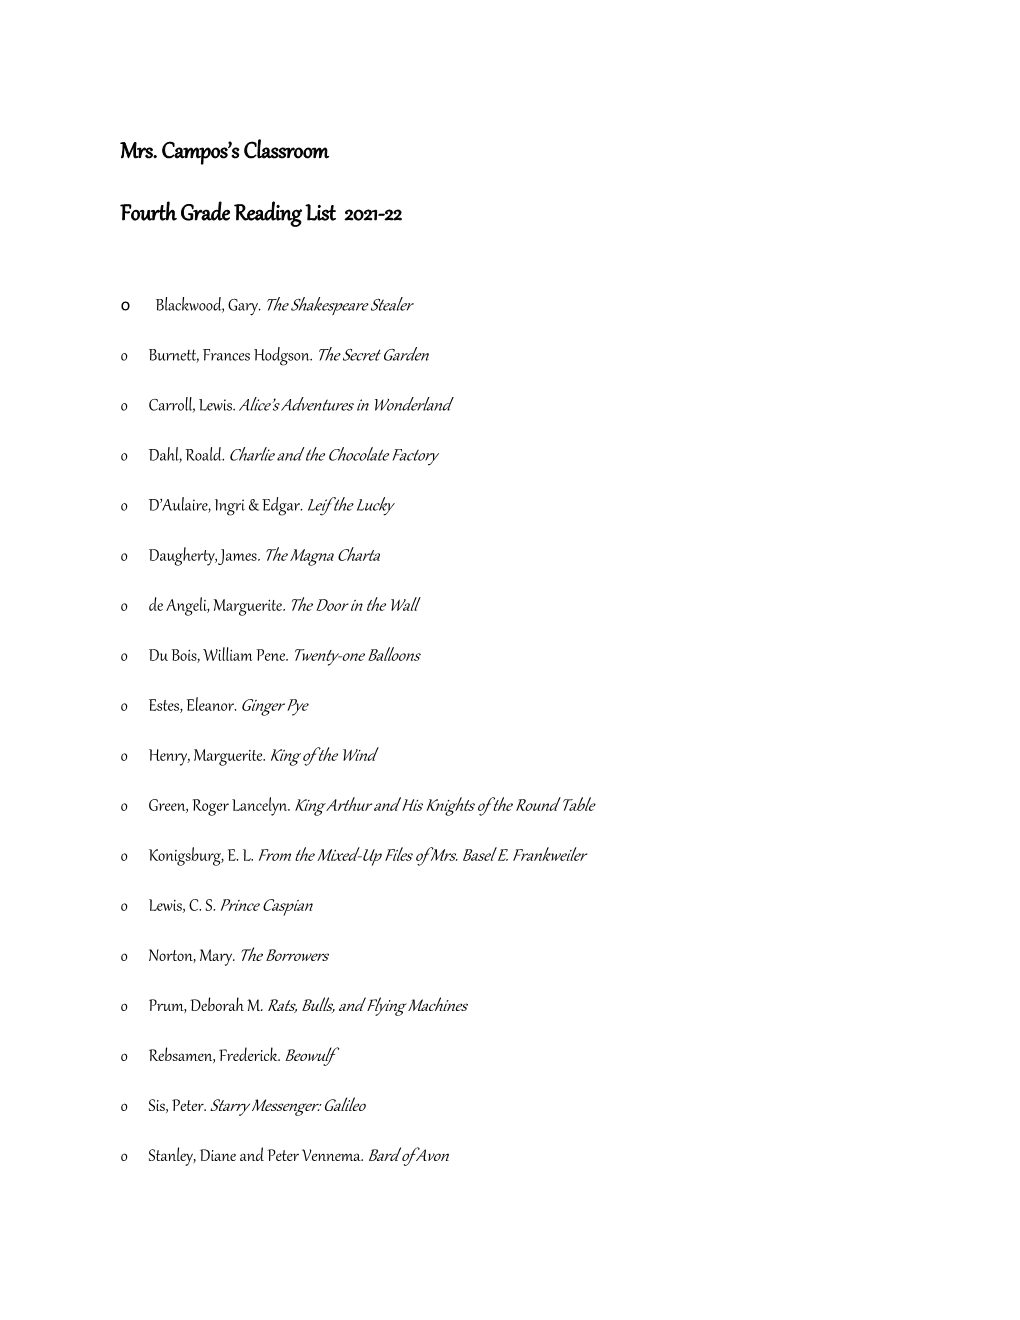 Mrs. Campos's Classroom Fourth Grade Reading List 2021-22